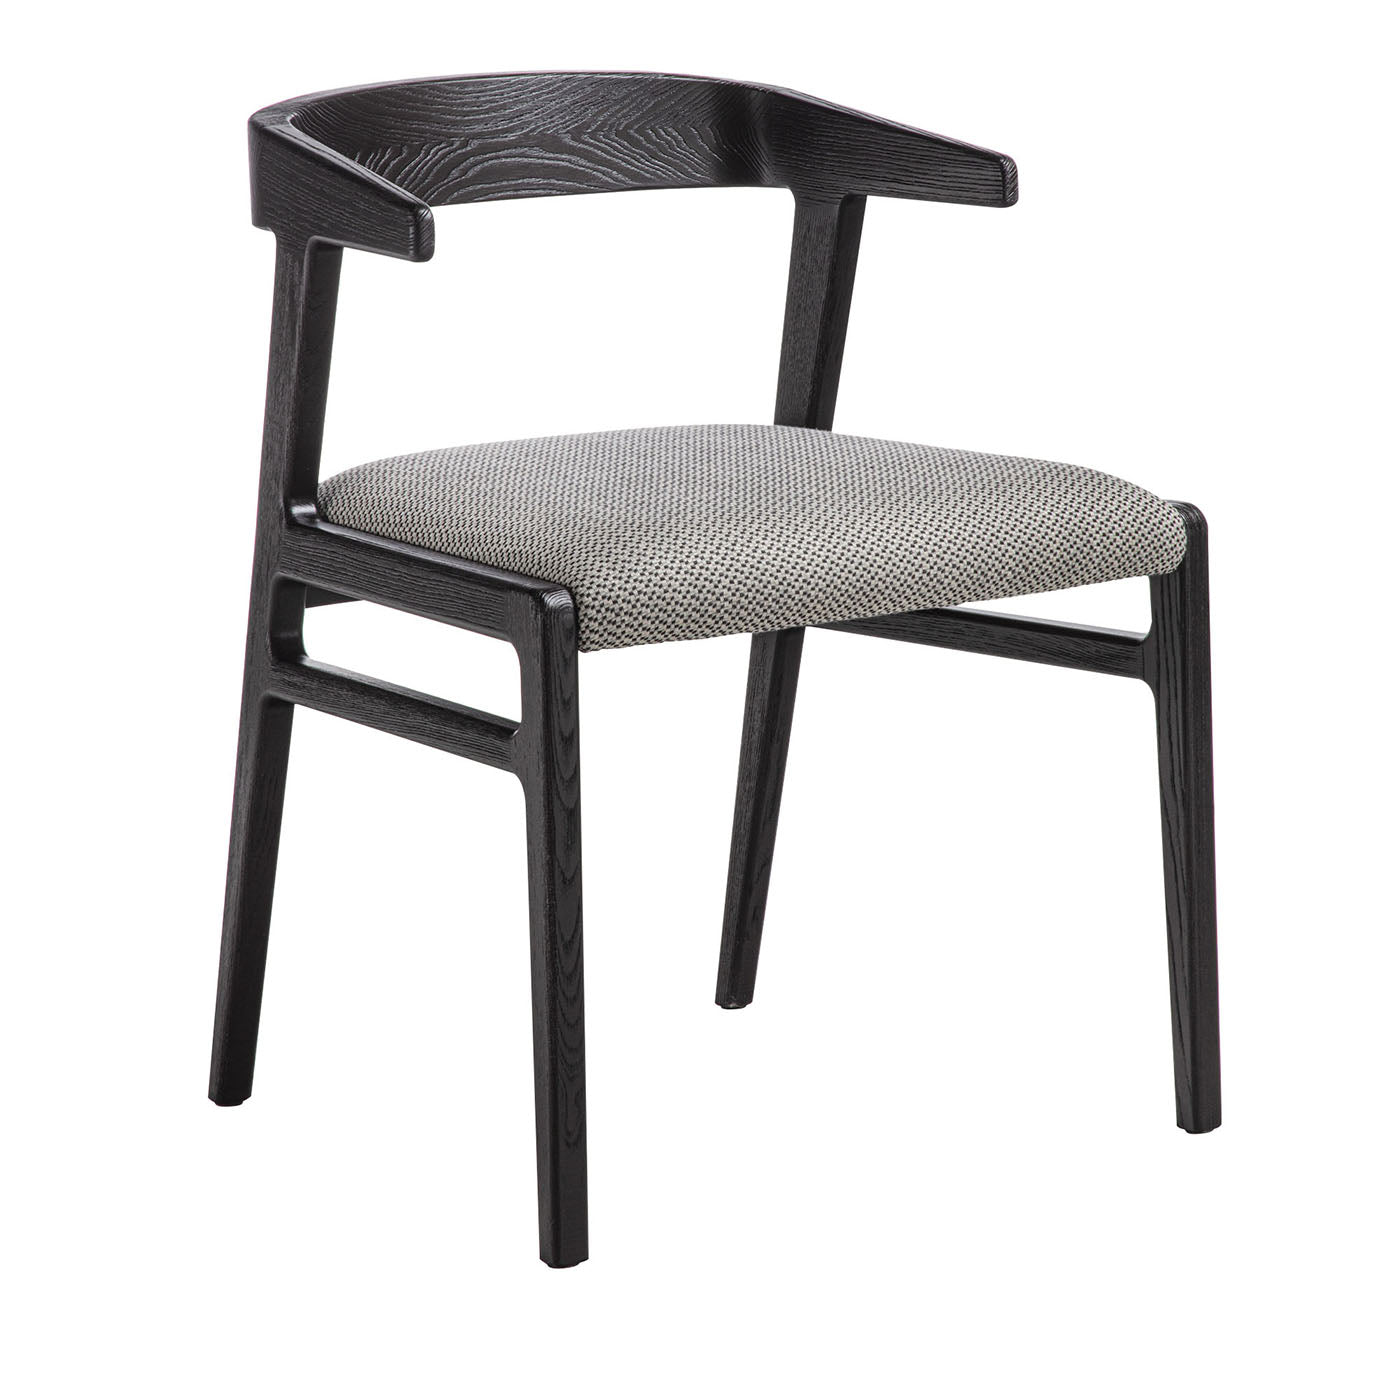 Aida Black Chair with Arms - Main view